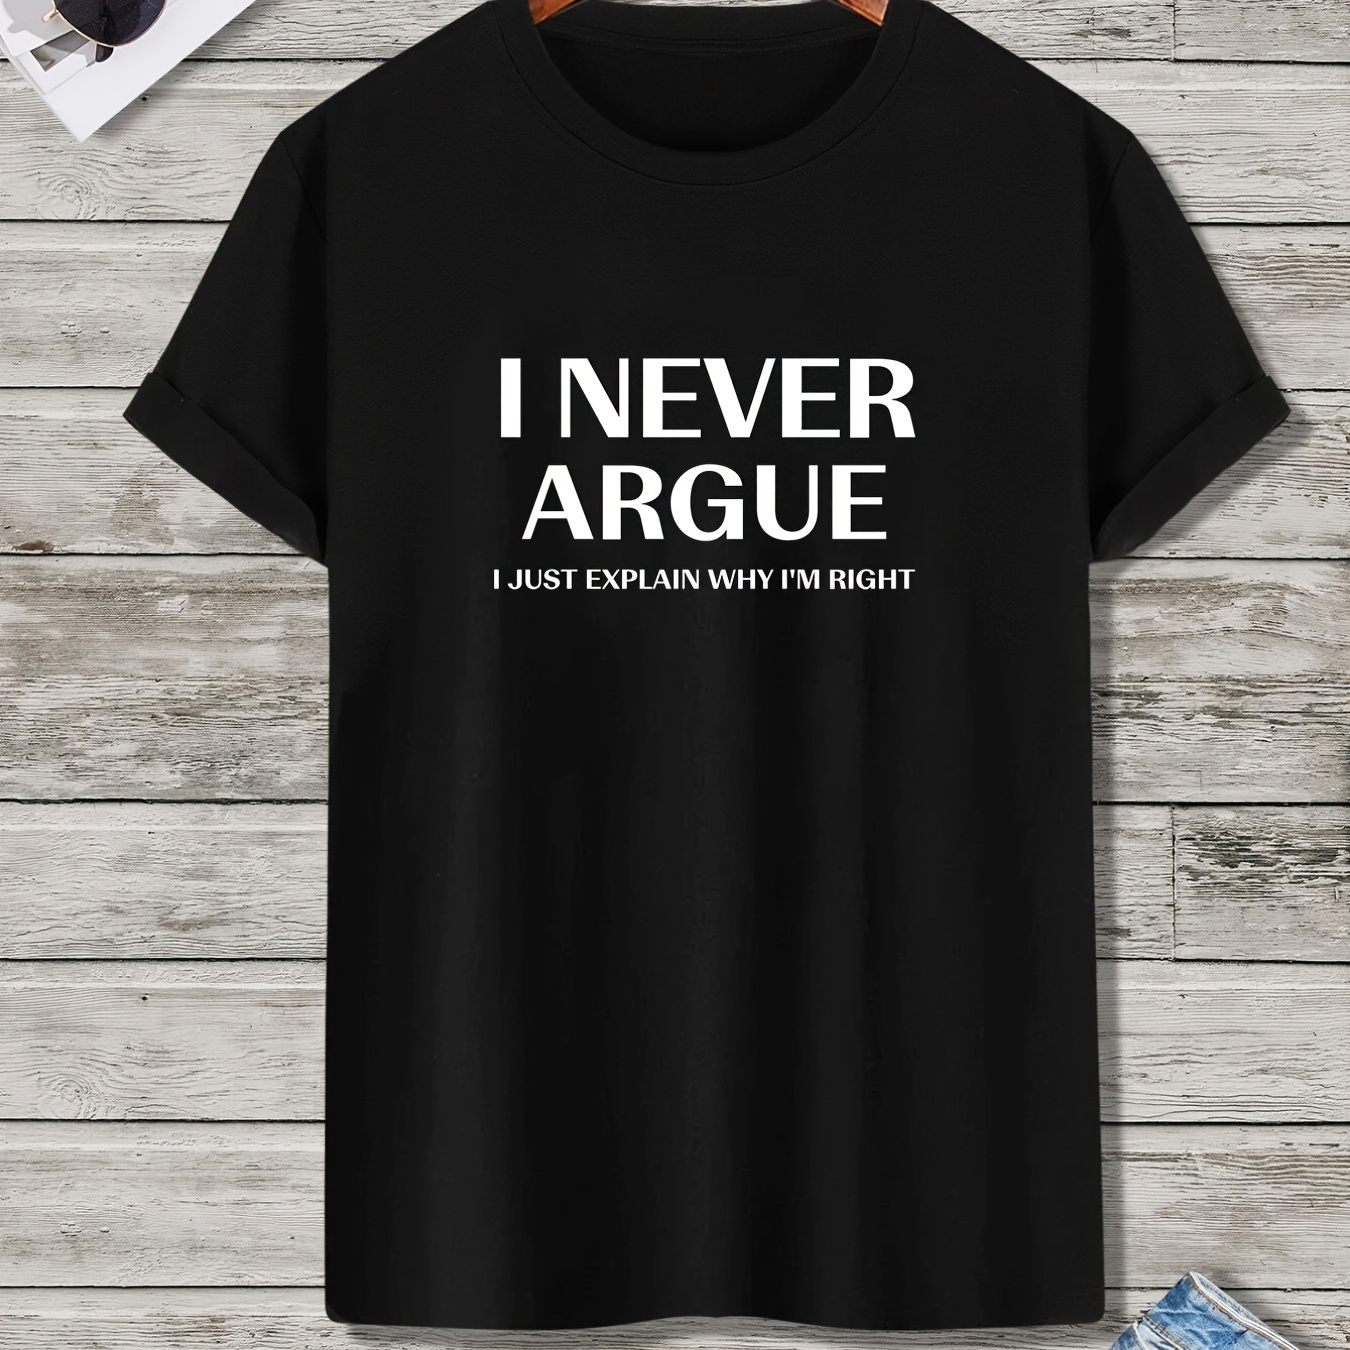 Slogan Graphic T Shirt Men's Casual Short Sleeve Shirt For Summer ...